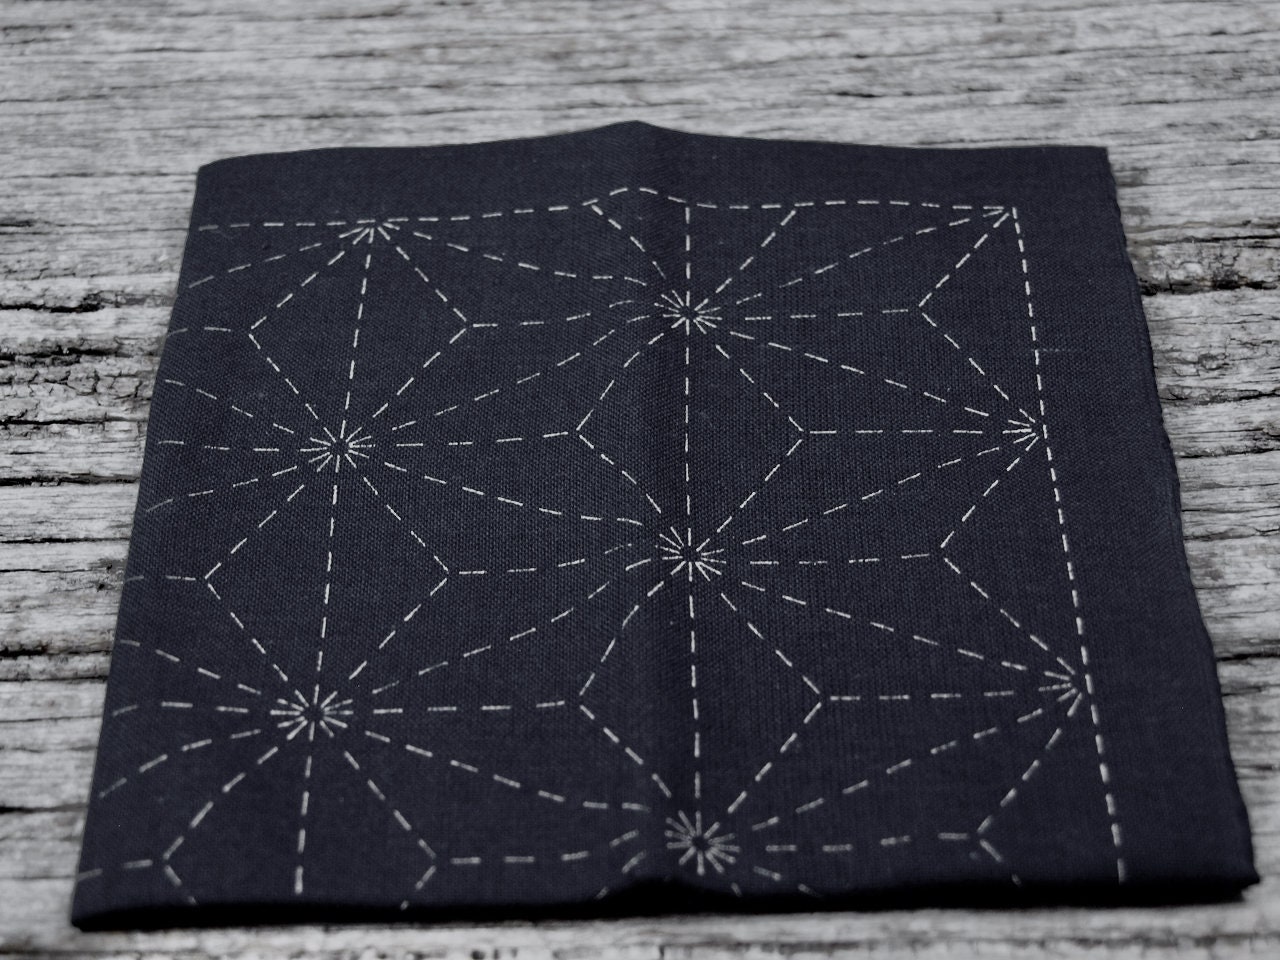 Cotton sashiko fabric with wash-out hemp leaf pattern, blue - SARTOR BOHEMIA